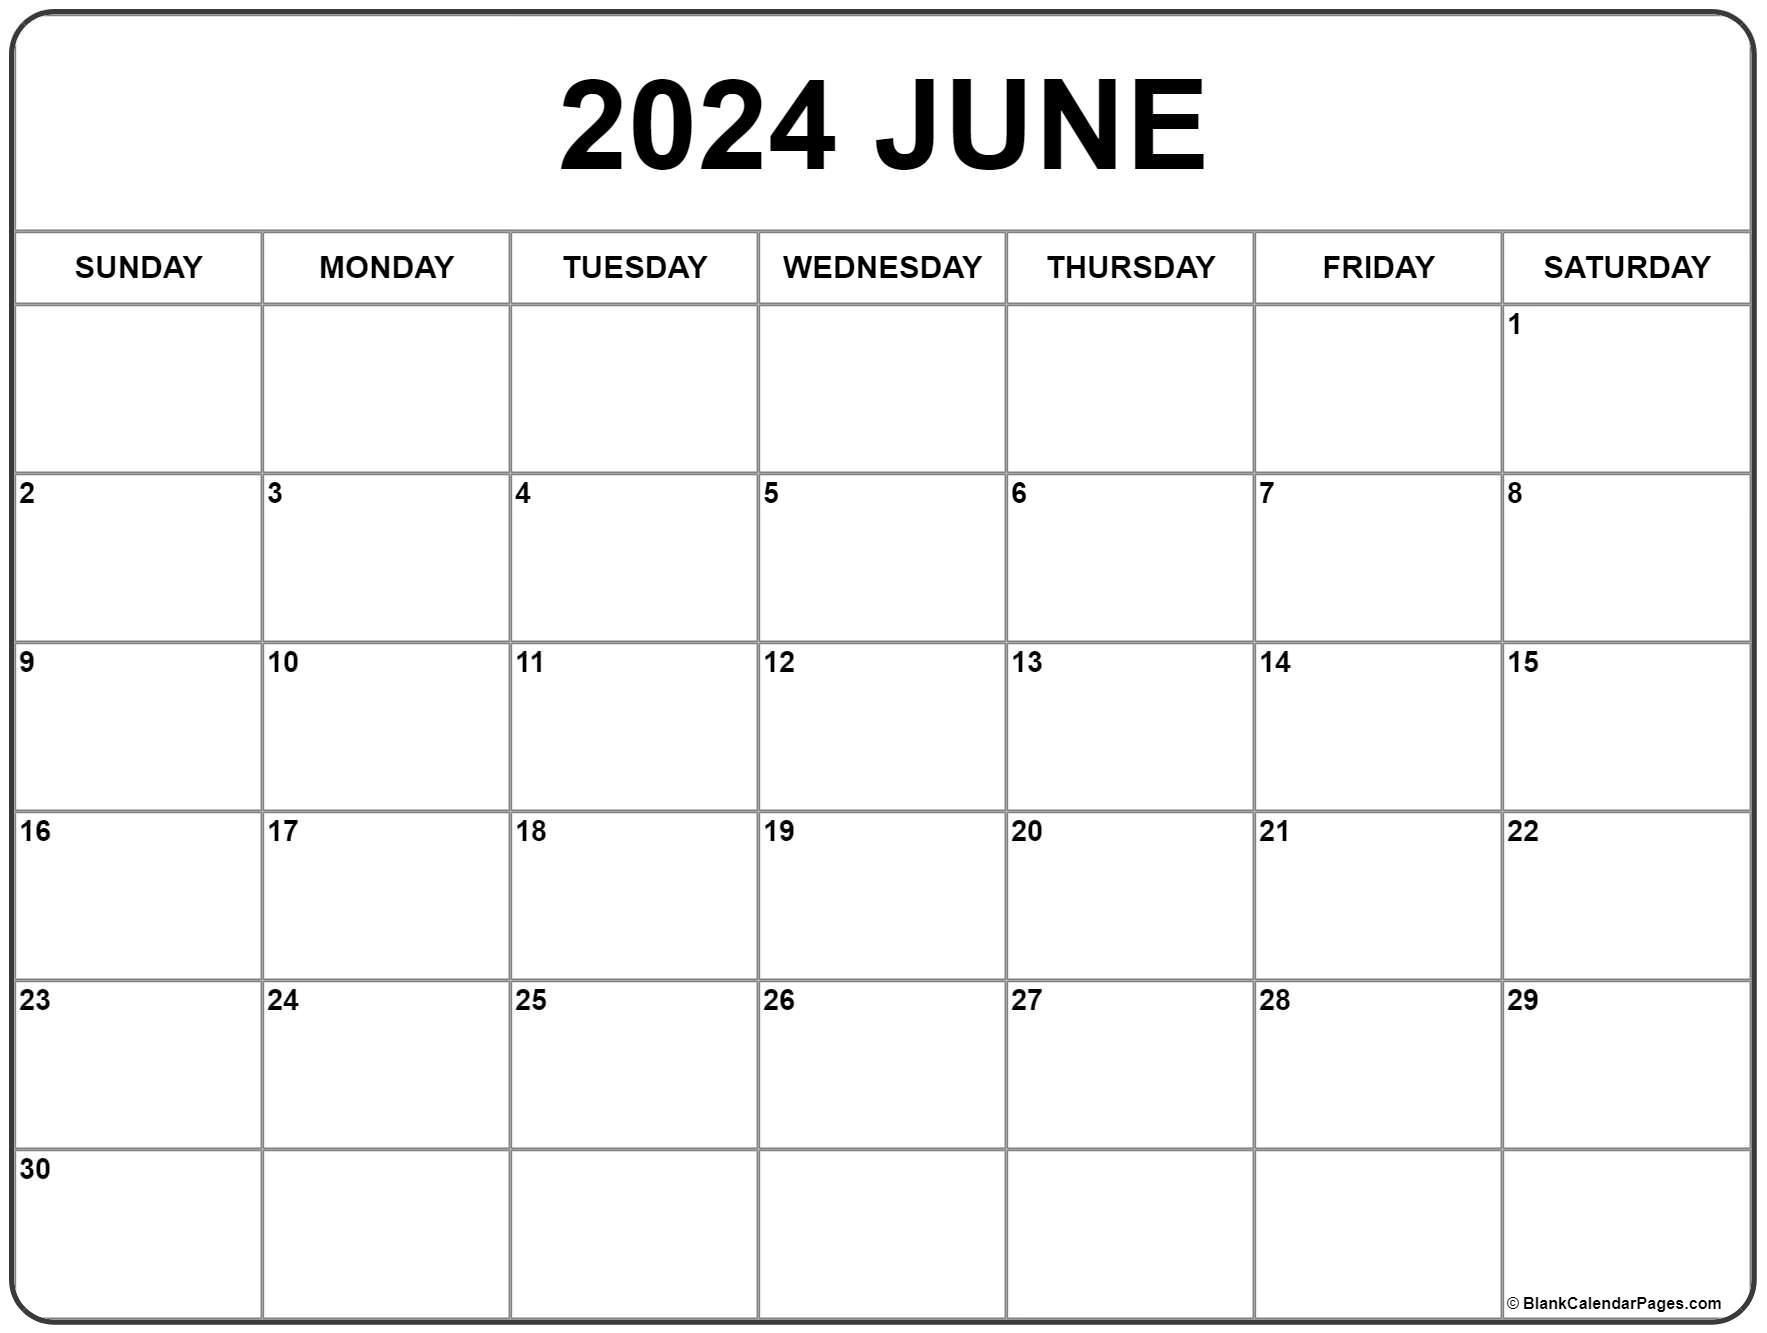 June 2021 calendar free printable calendar templates